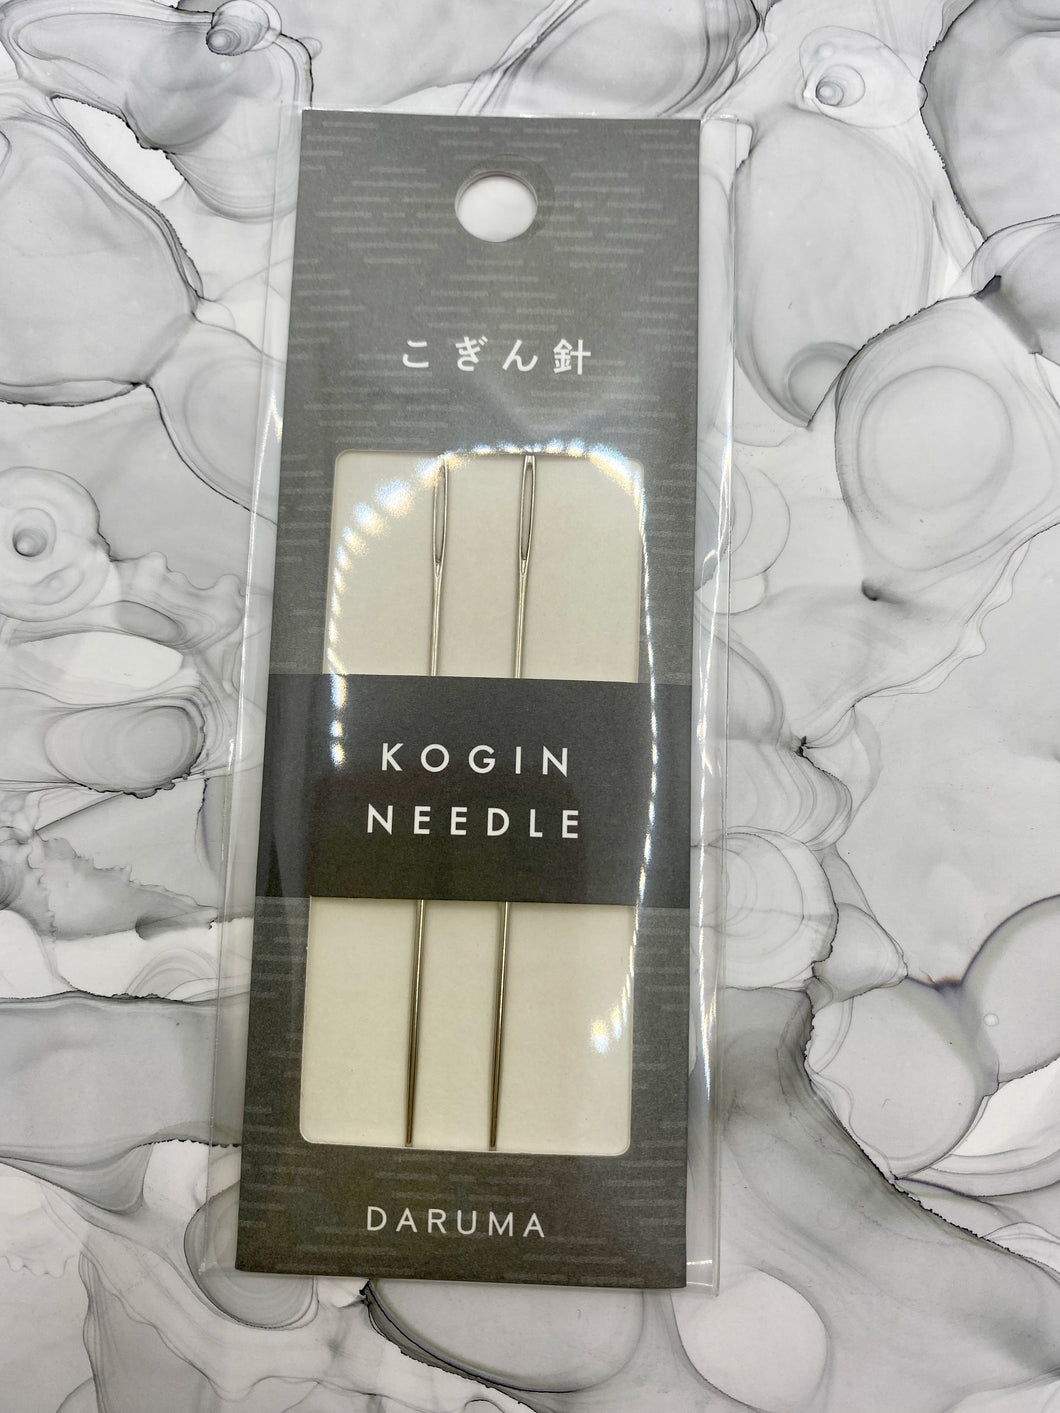 Kogin Needles by Daruma